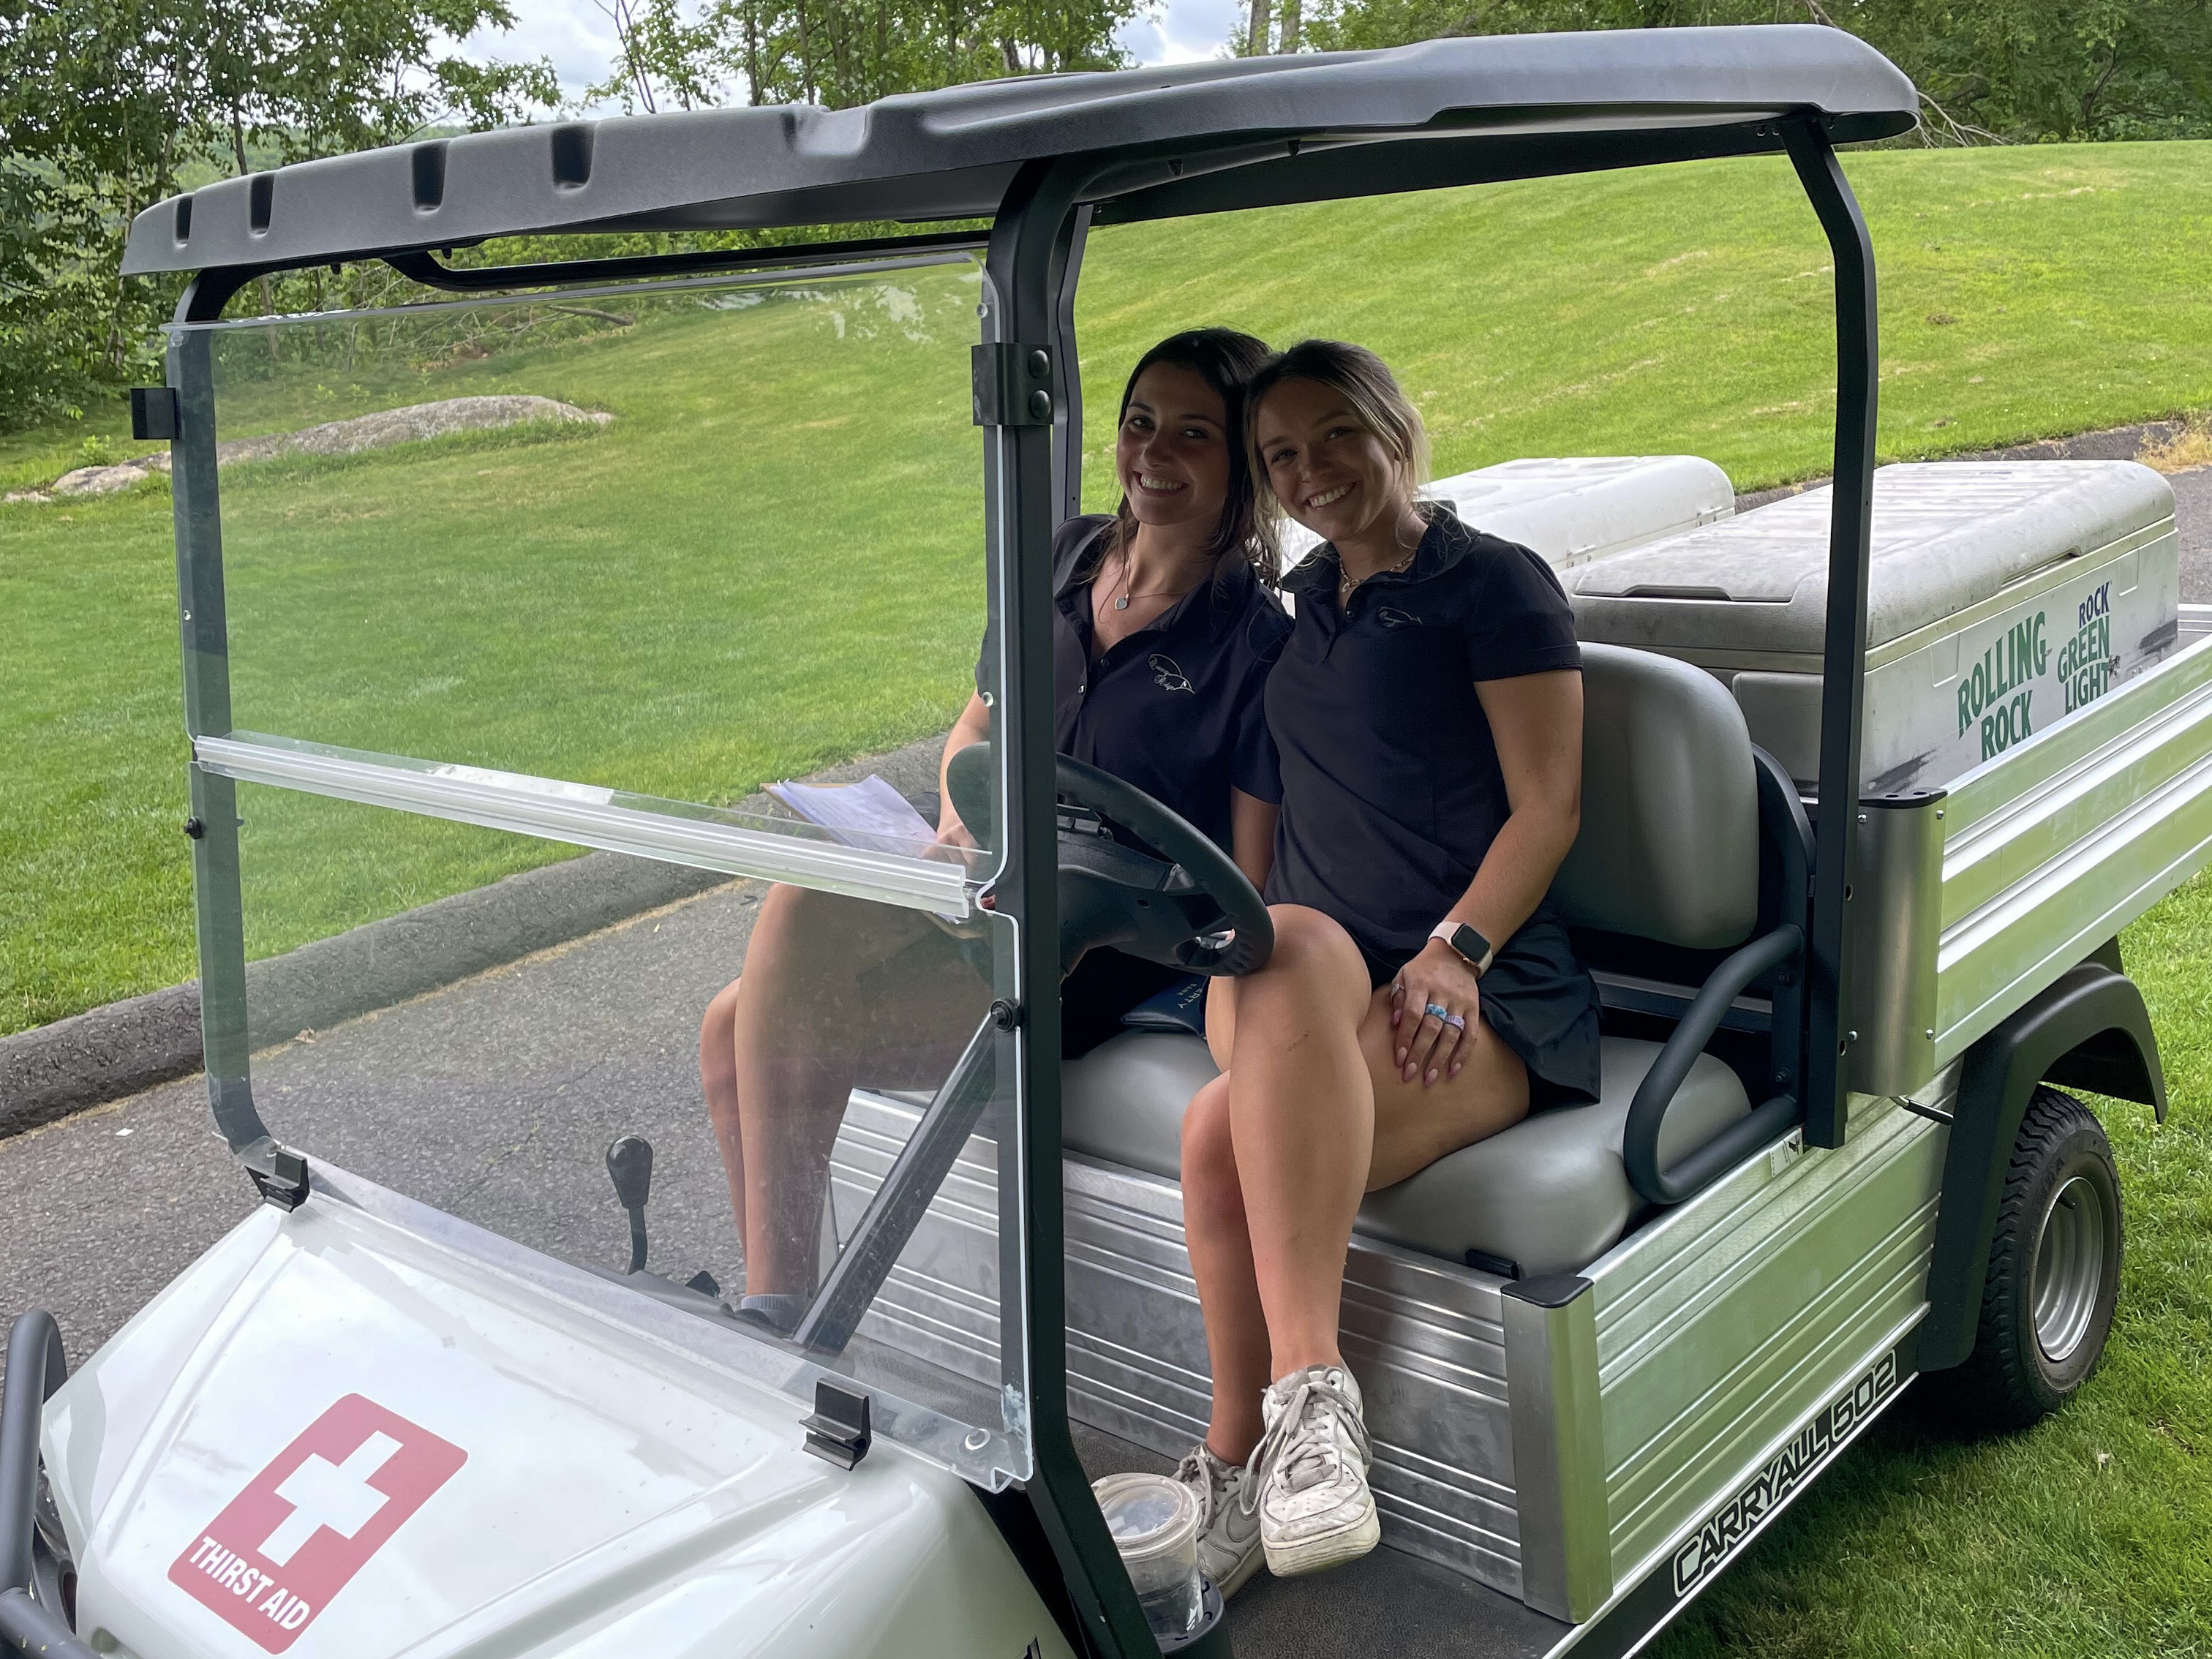 Two women sitting in a golf cart